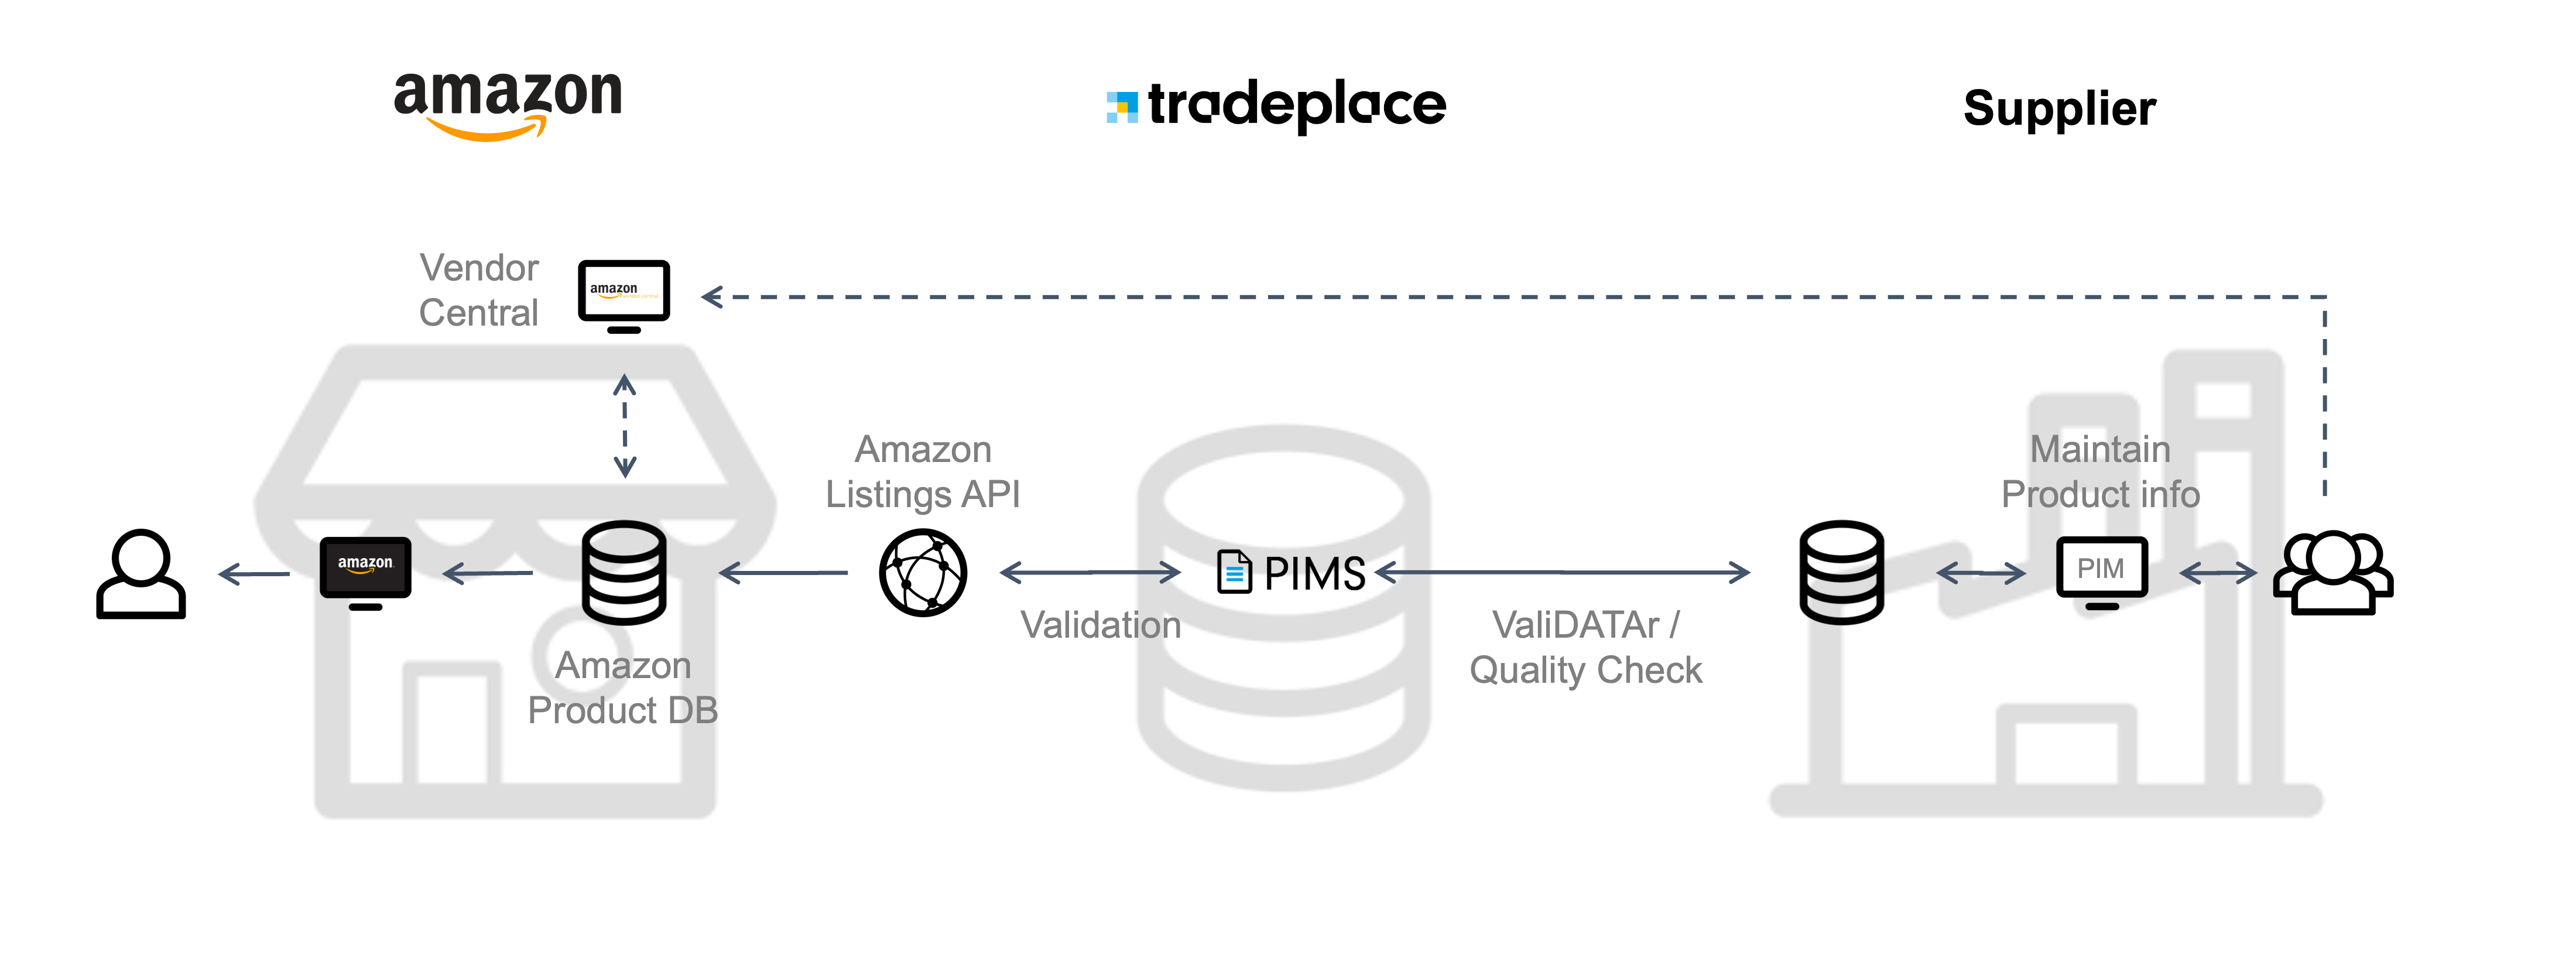 Tradeplace_Amazon_Listings_API_hybrid_vendor_central